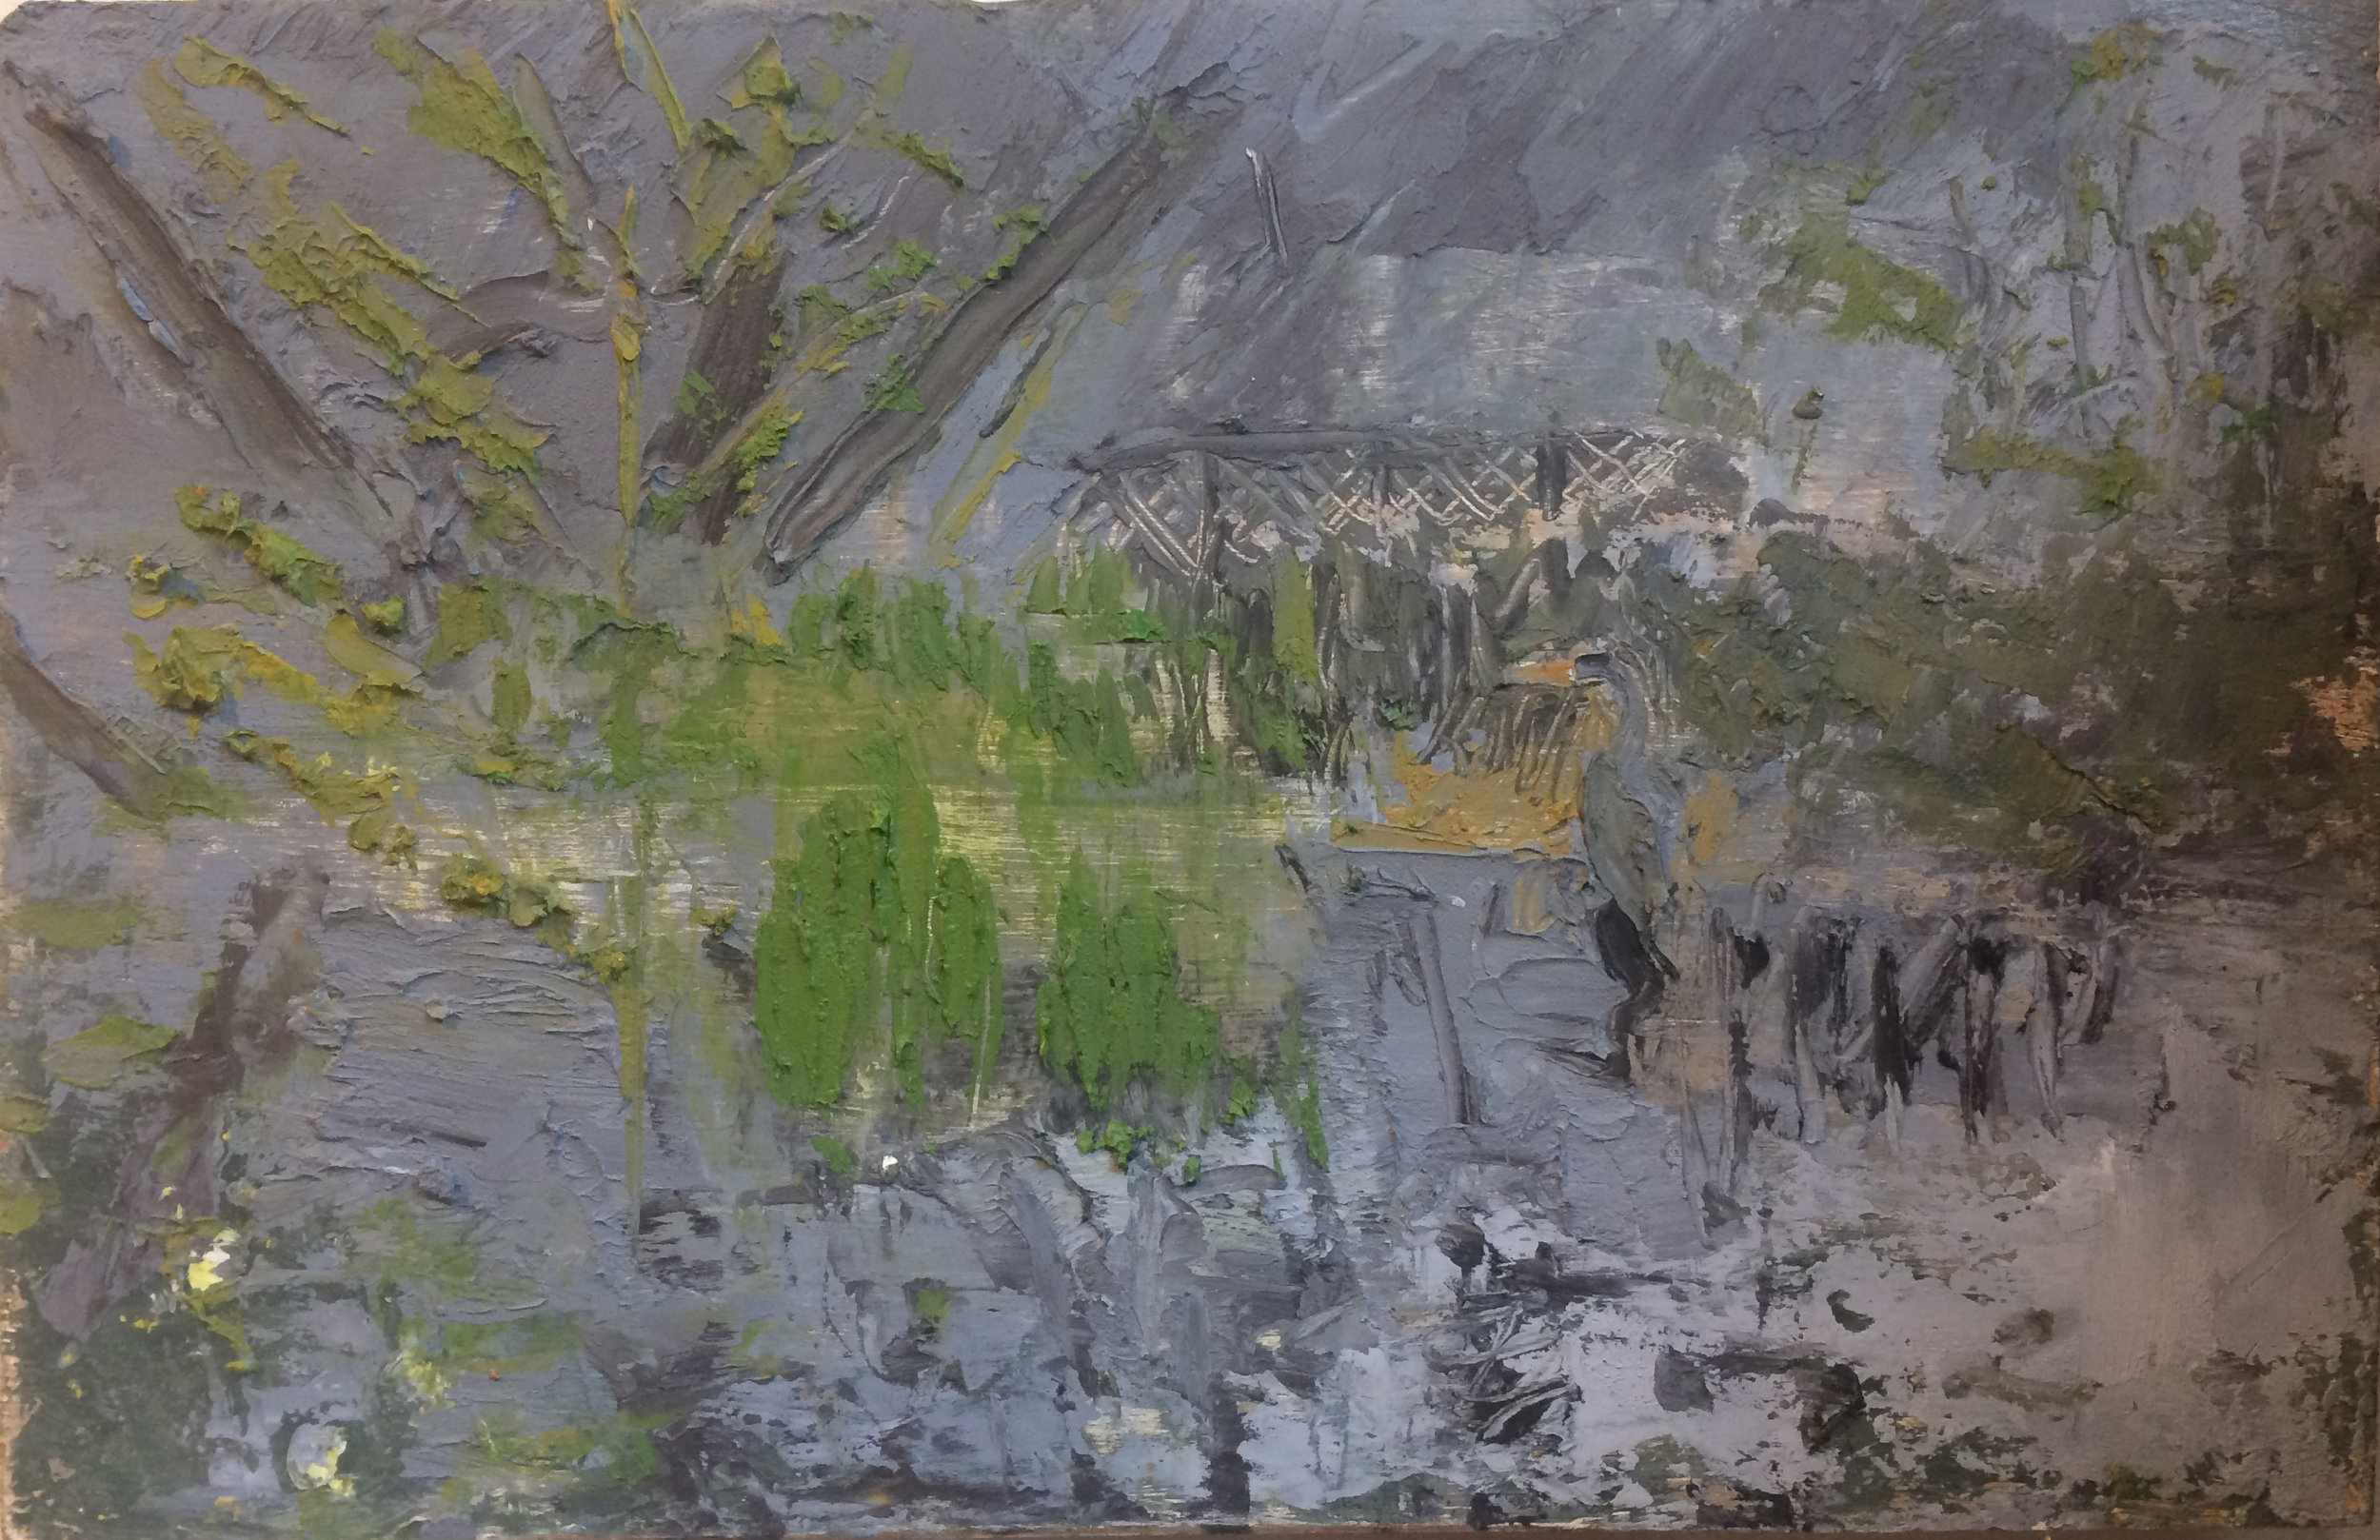 Heron in the marsh (mirror), oil on panel, 2017